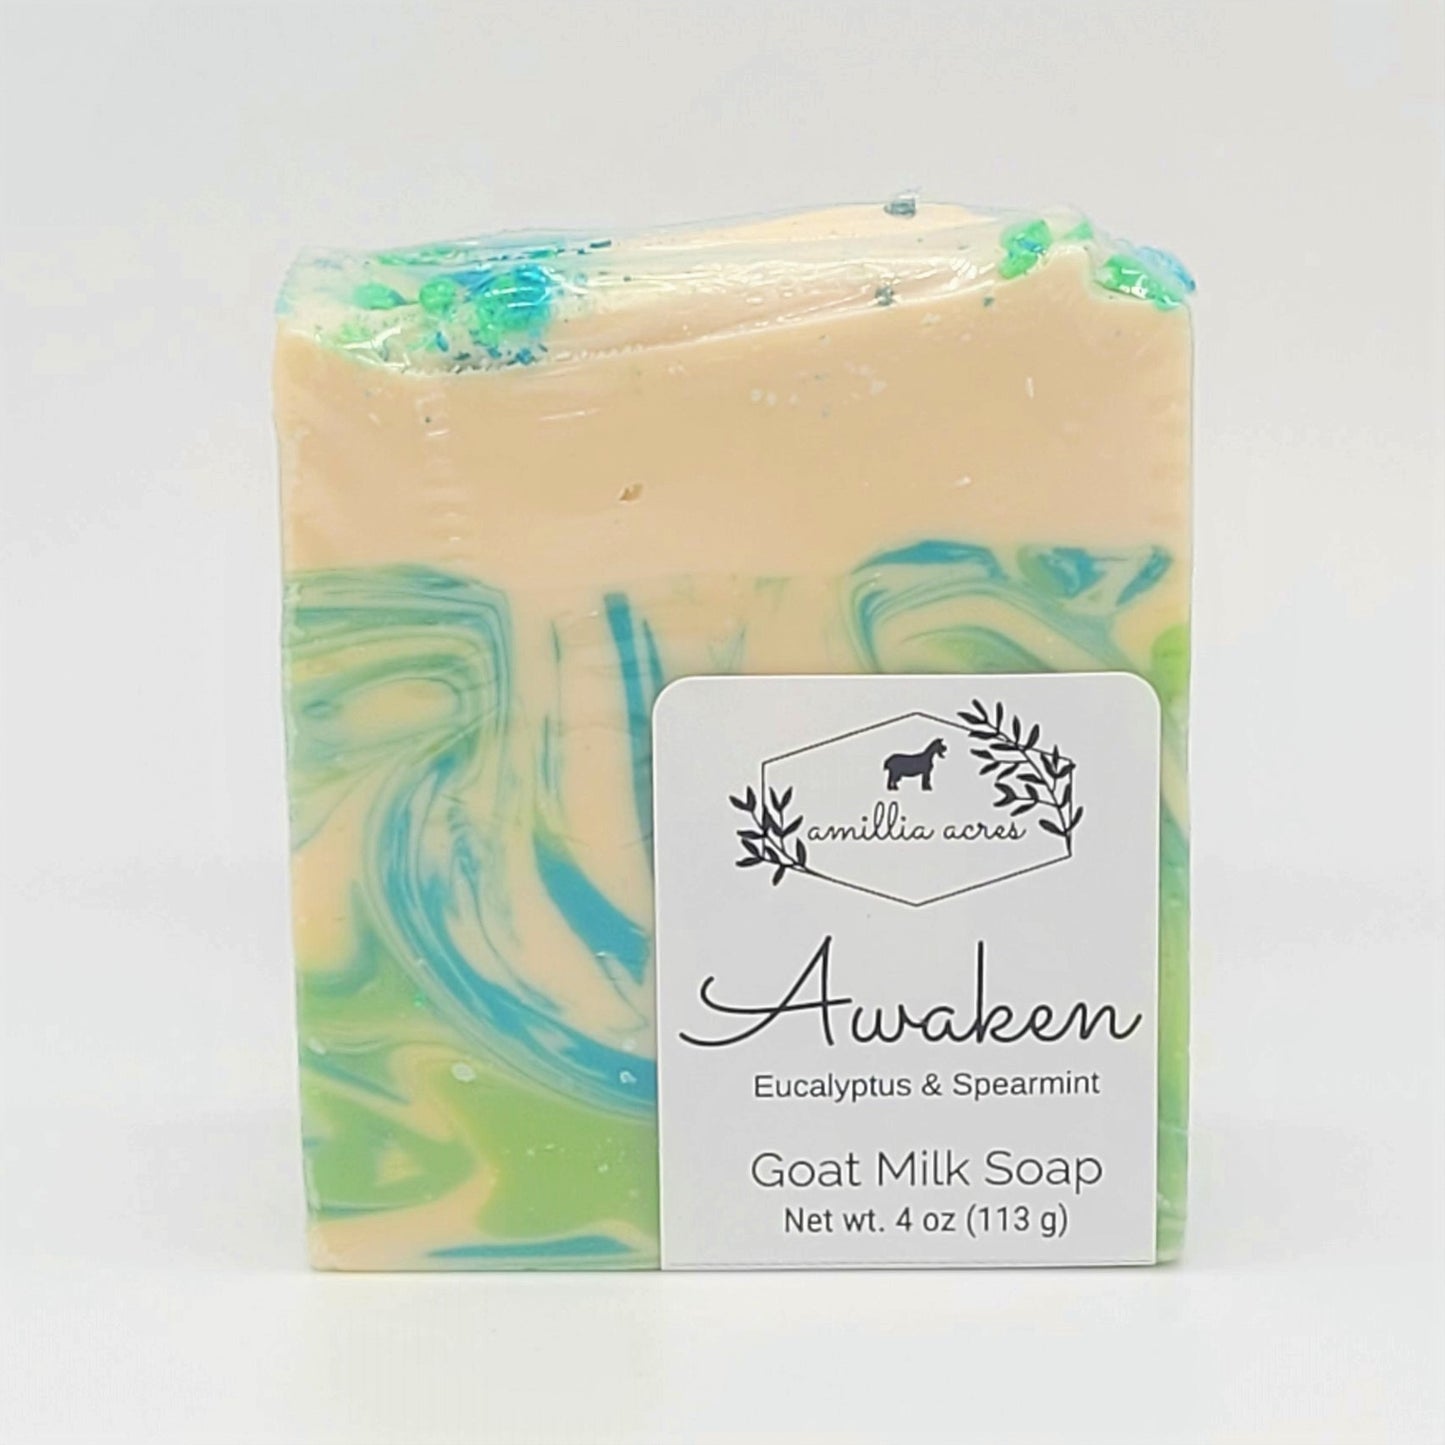 Awaken Goat Milk Soap (Eucalyptus Spearmint)